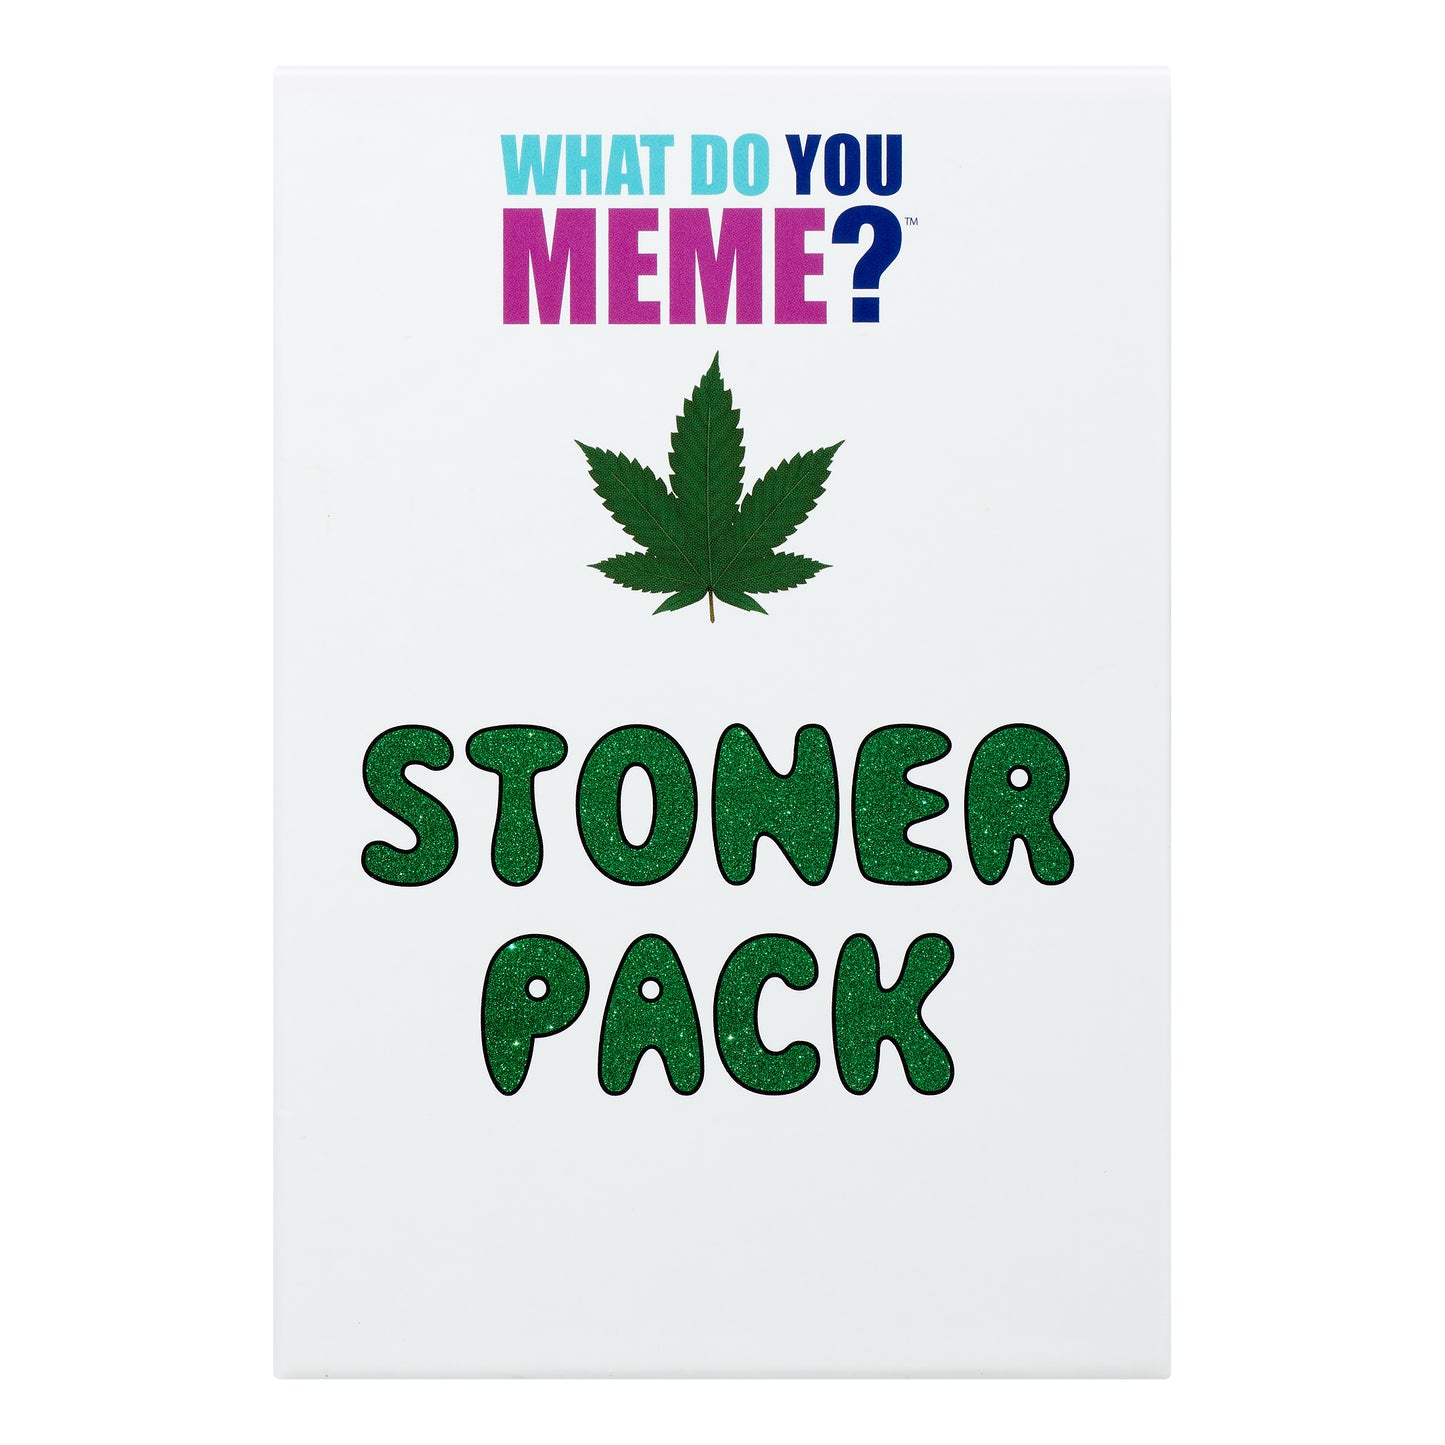 What Do You MEME? Stoner Pack Expansion